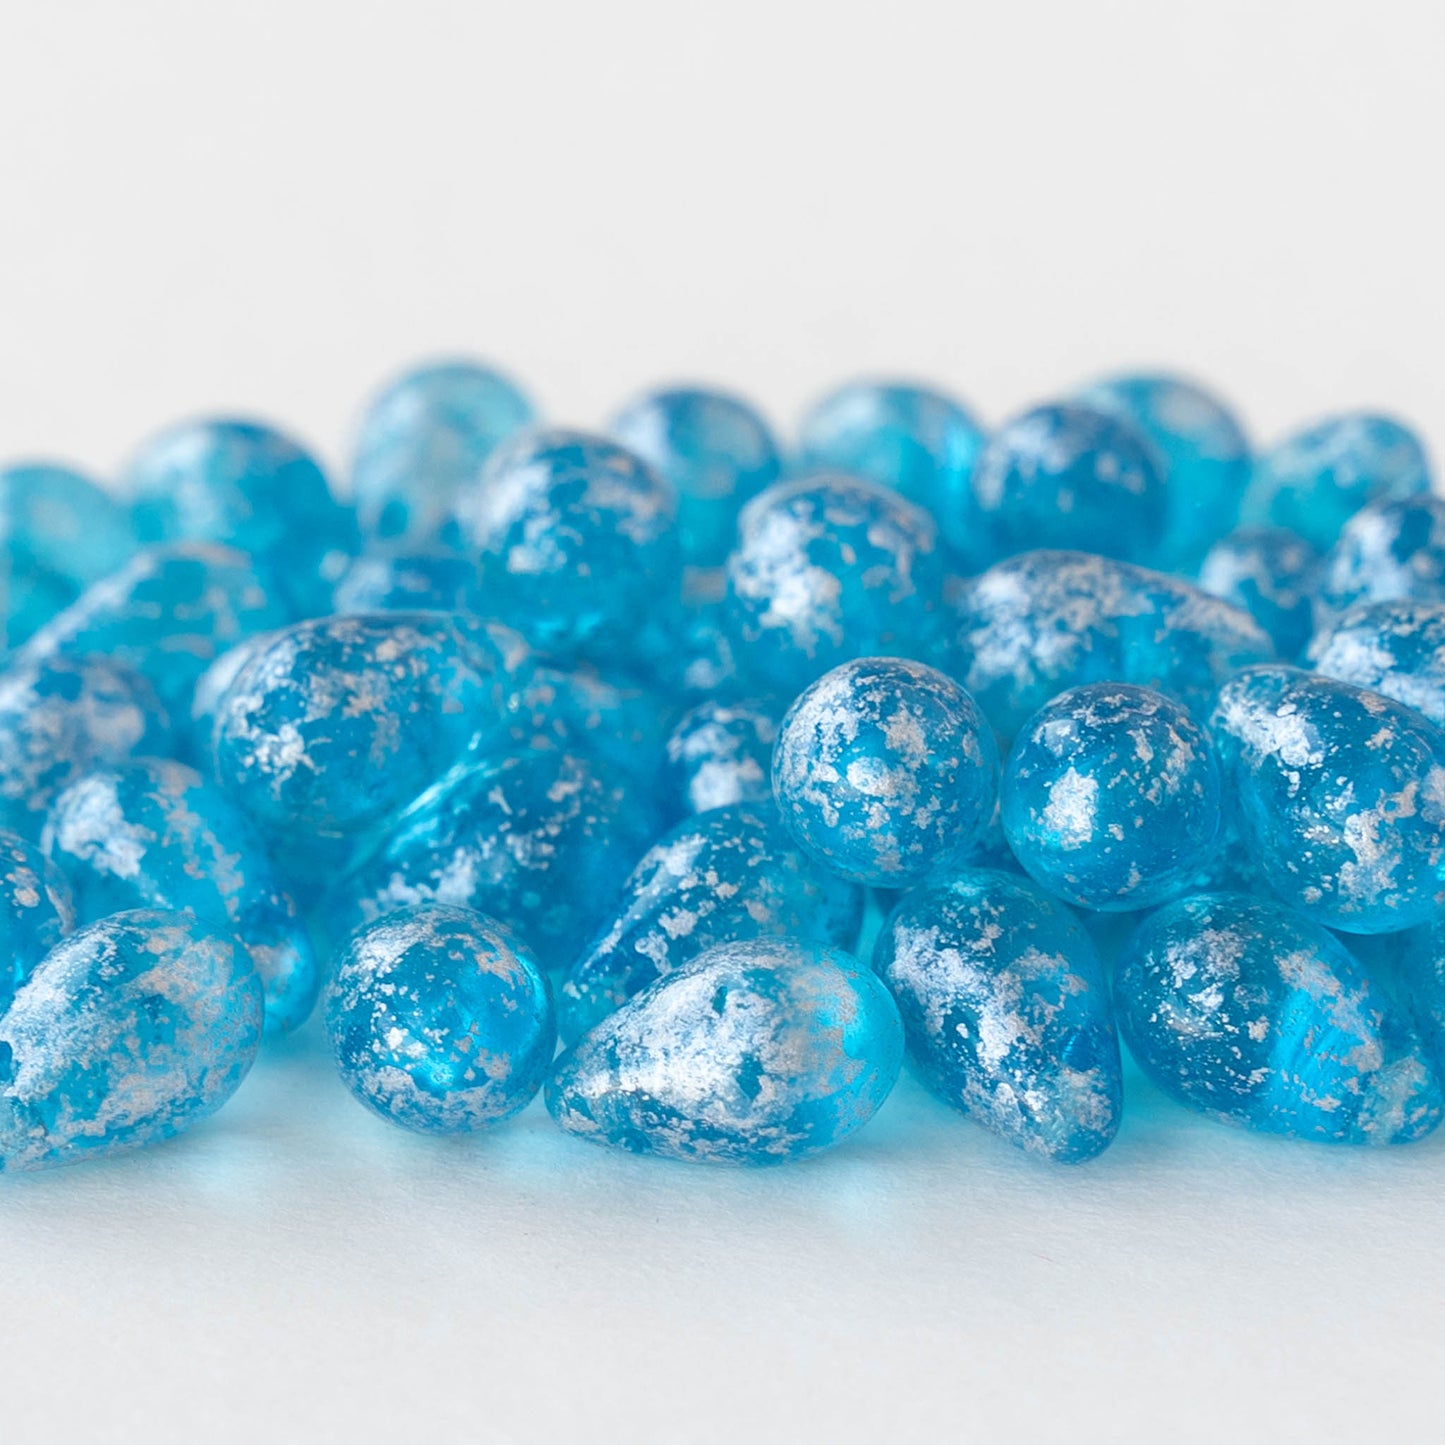 6x9mm Glass Teardrop Beads - Aqua Blue with Silver Dust - 50 Beads